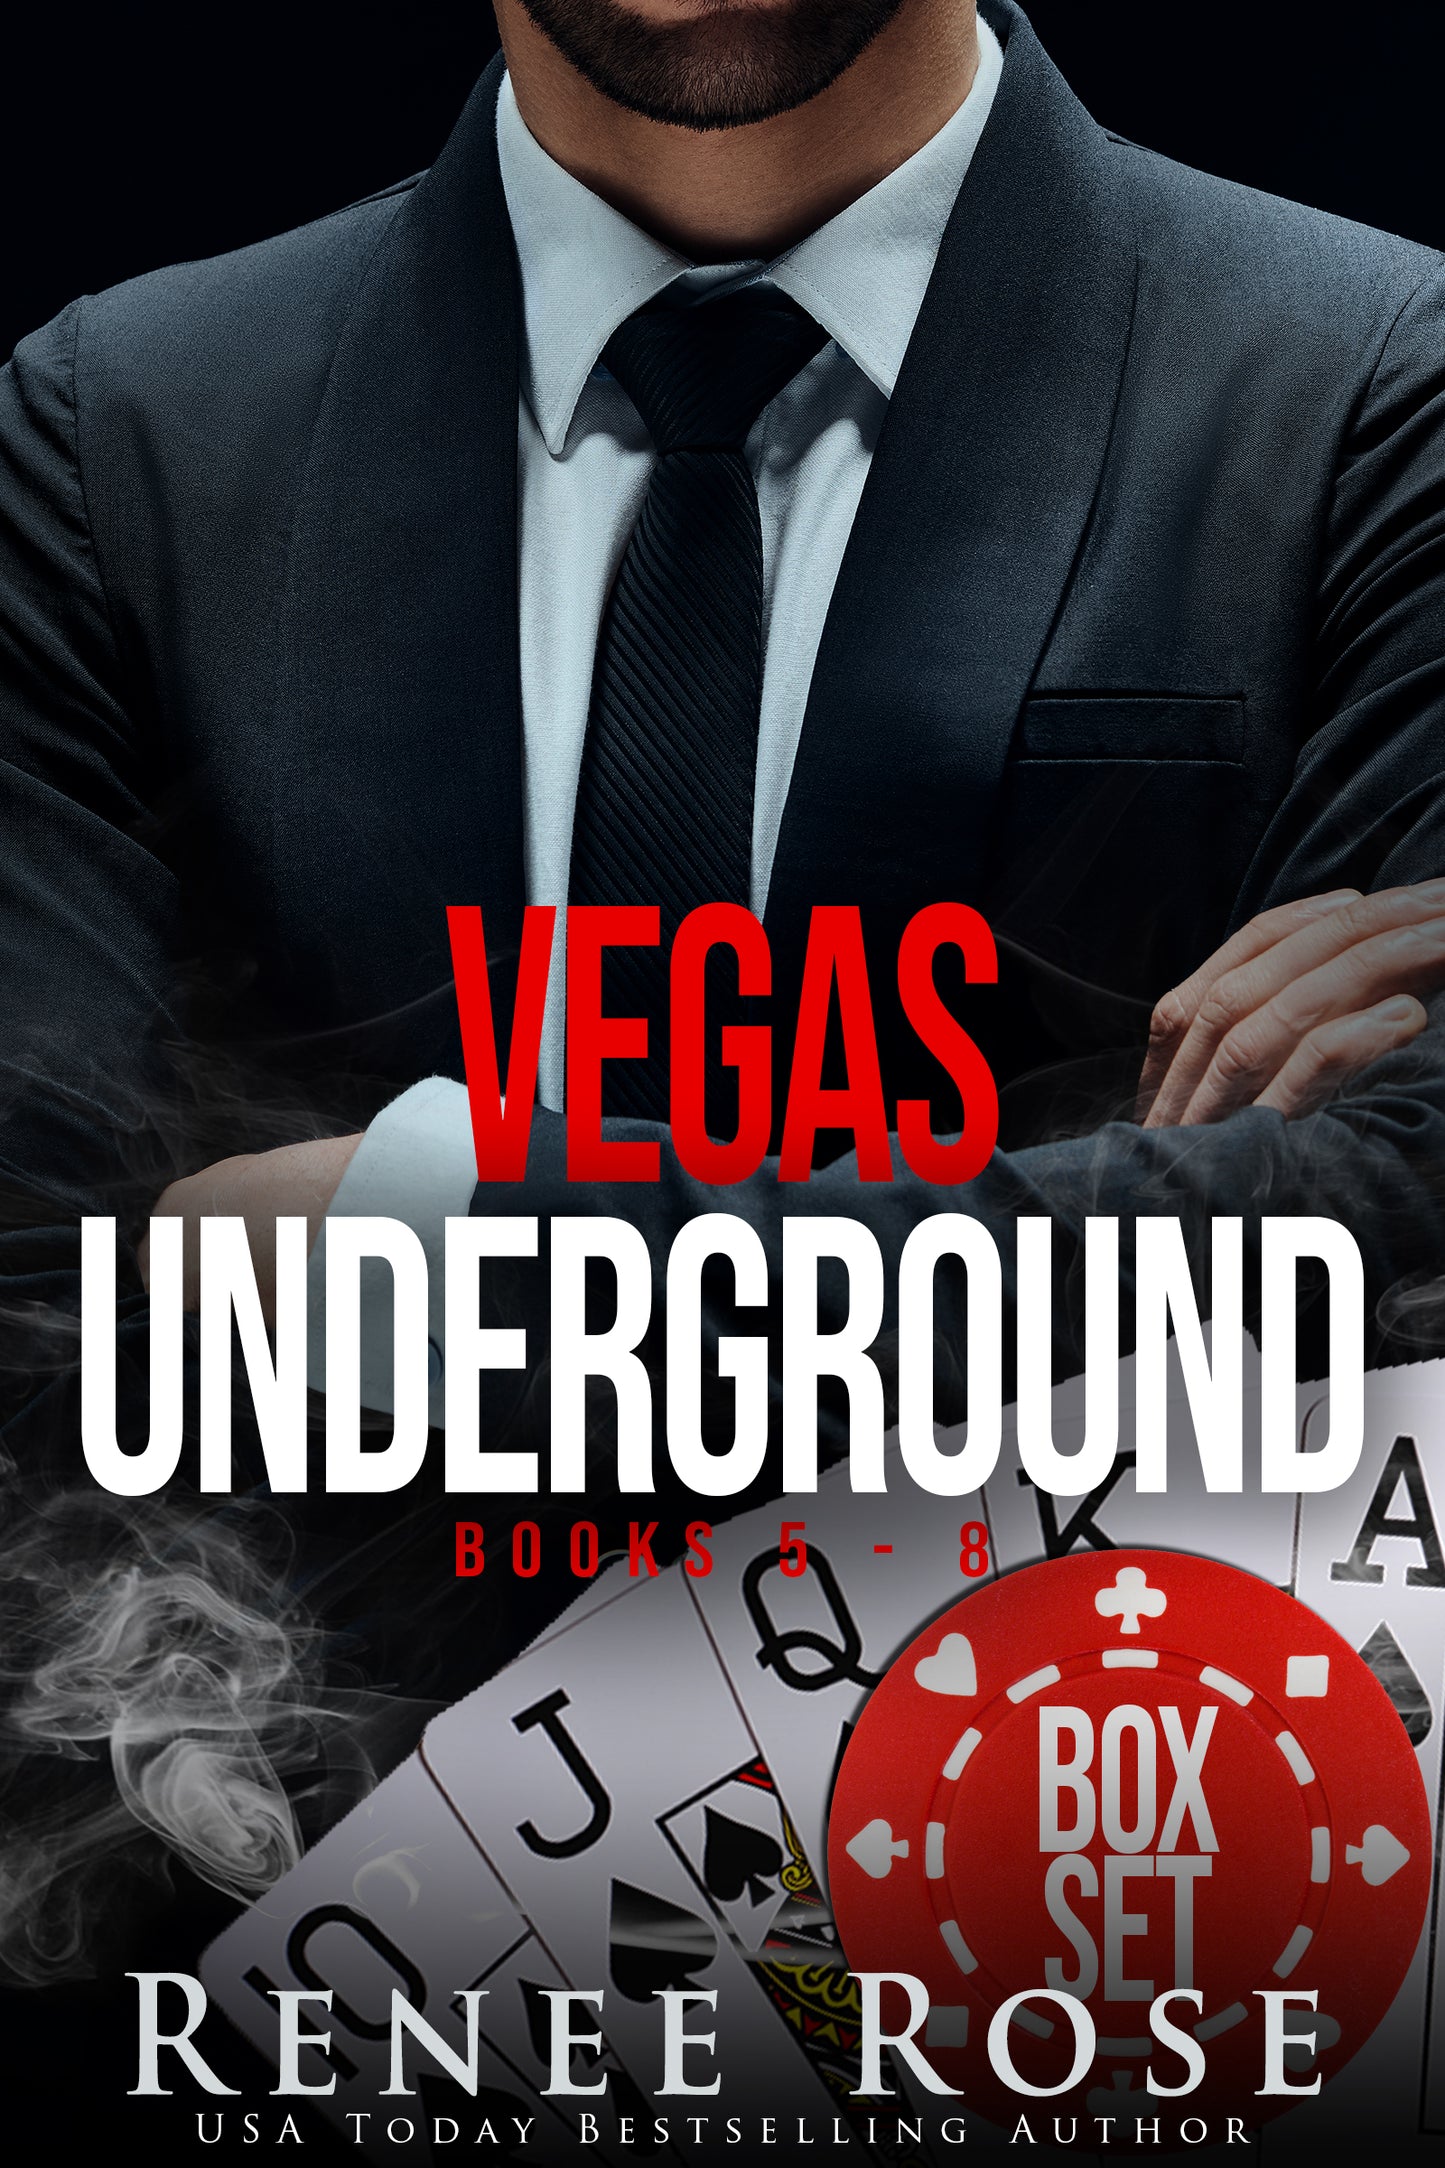 Vegas Underground Set: Books 5-8